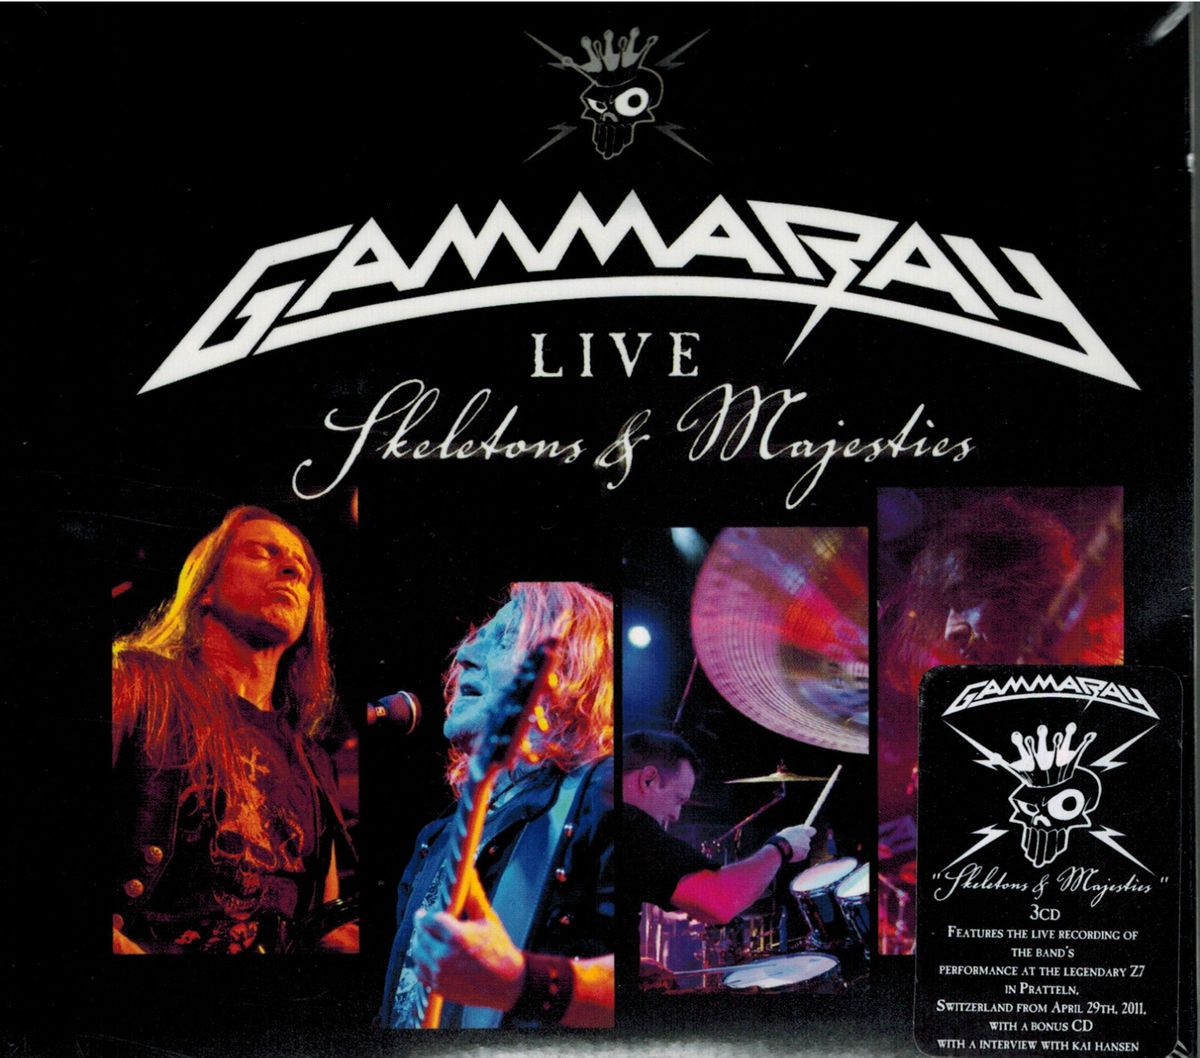 GAMMA RAY skeletons and majesties   live 3 CD   DIGIPAK EDITION